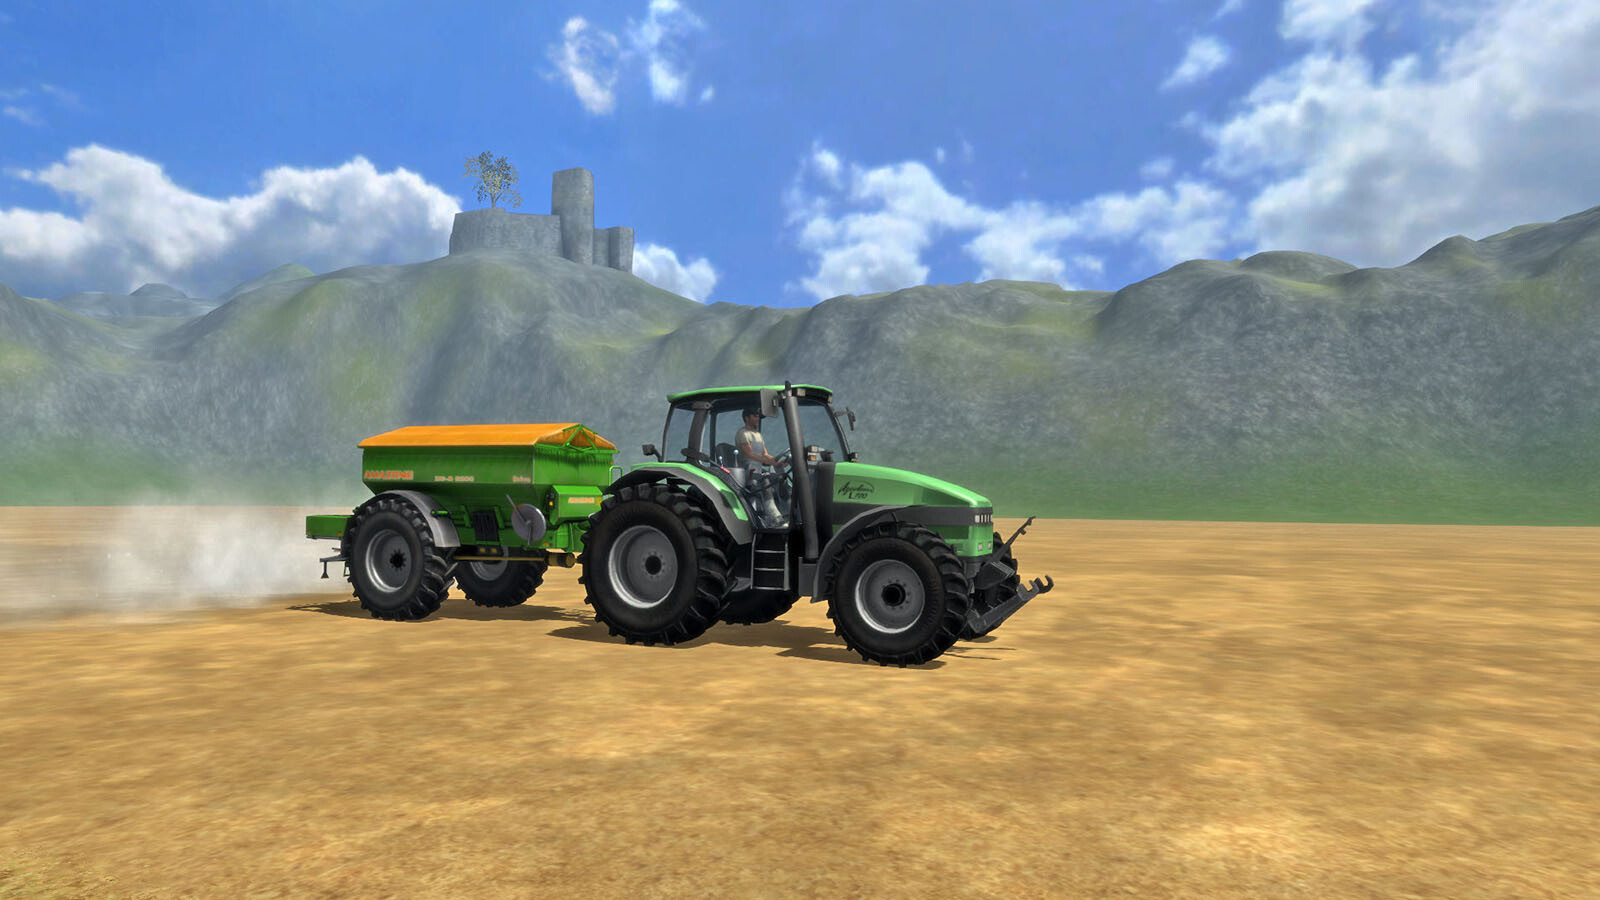 Buy cheap Farming Simulator 2011 cd key - lowest price